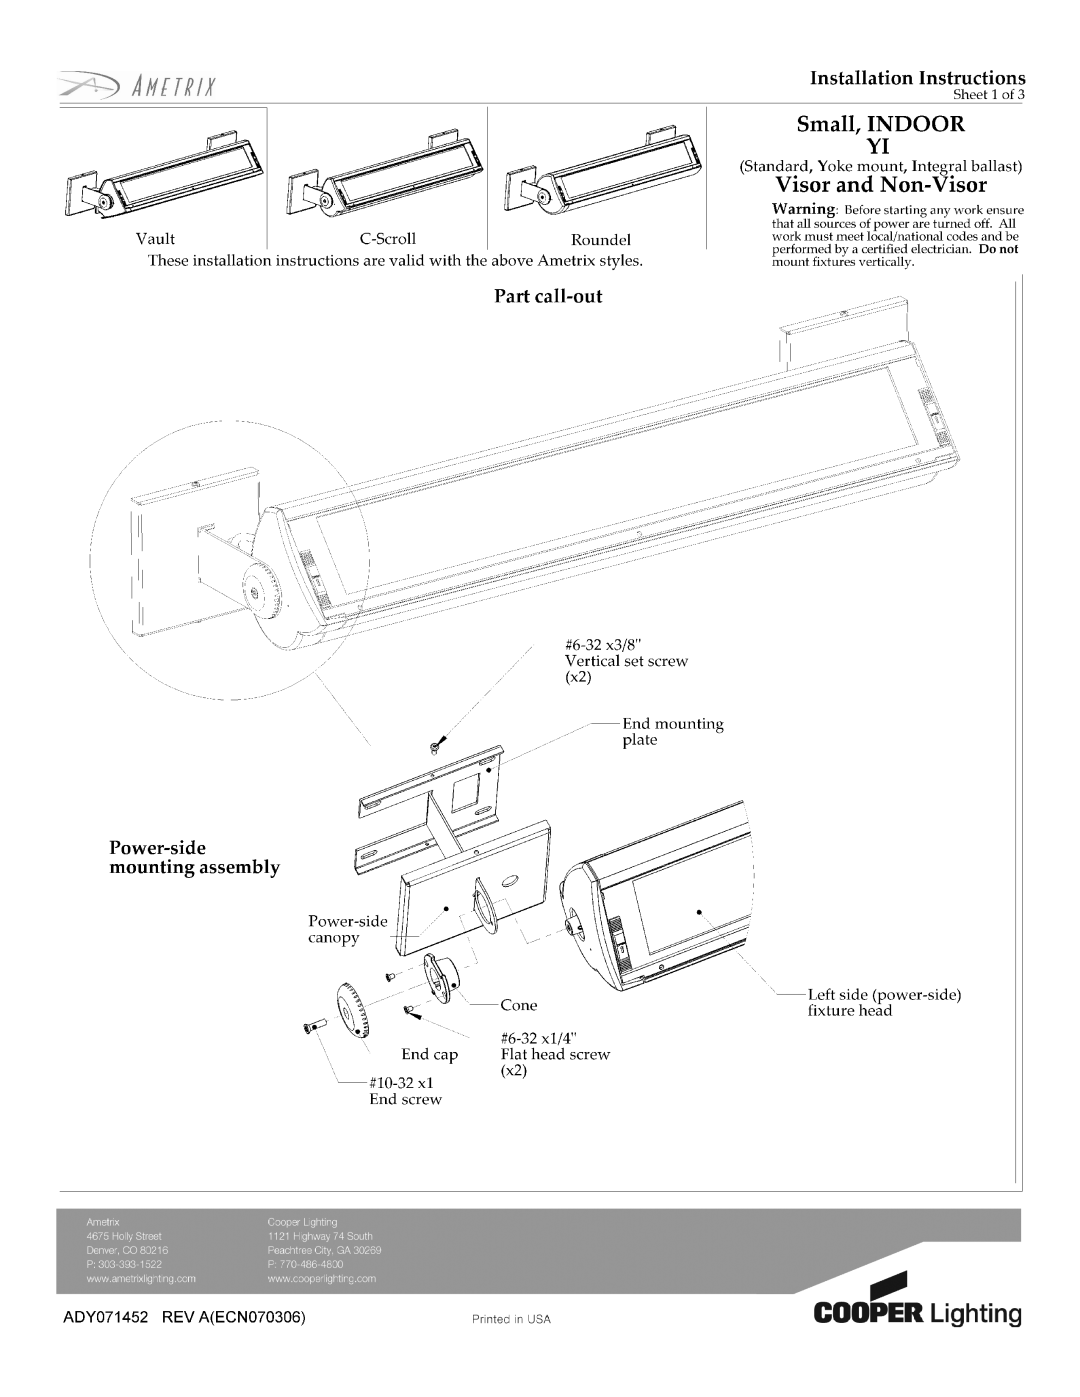 Cooper Lighting ADY071452 manual 